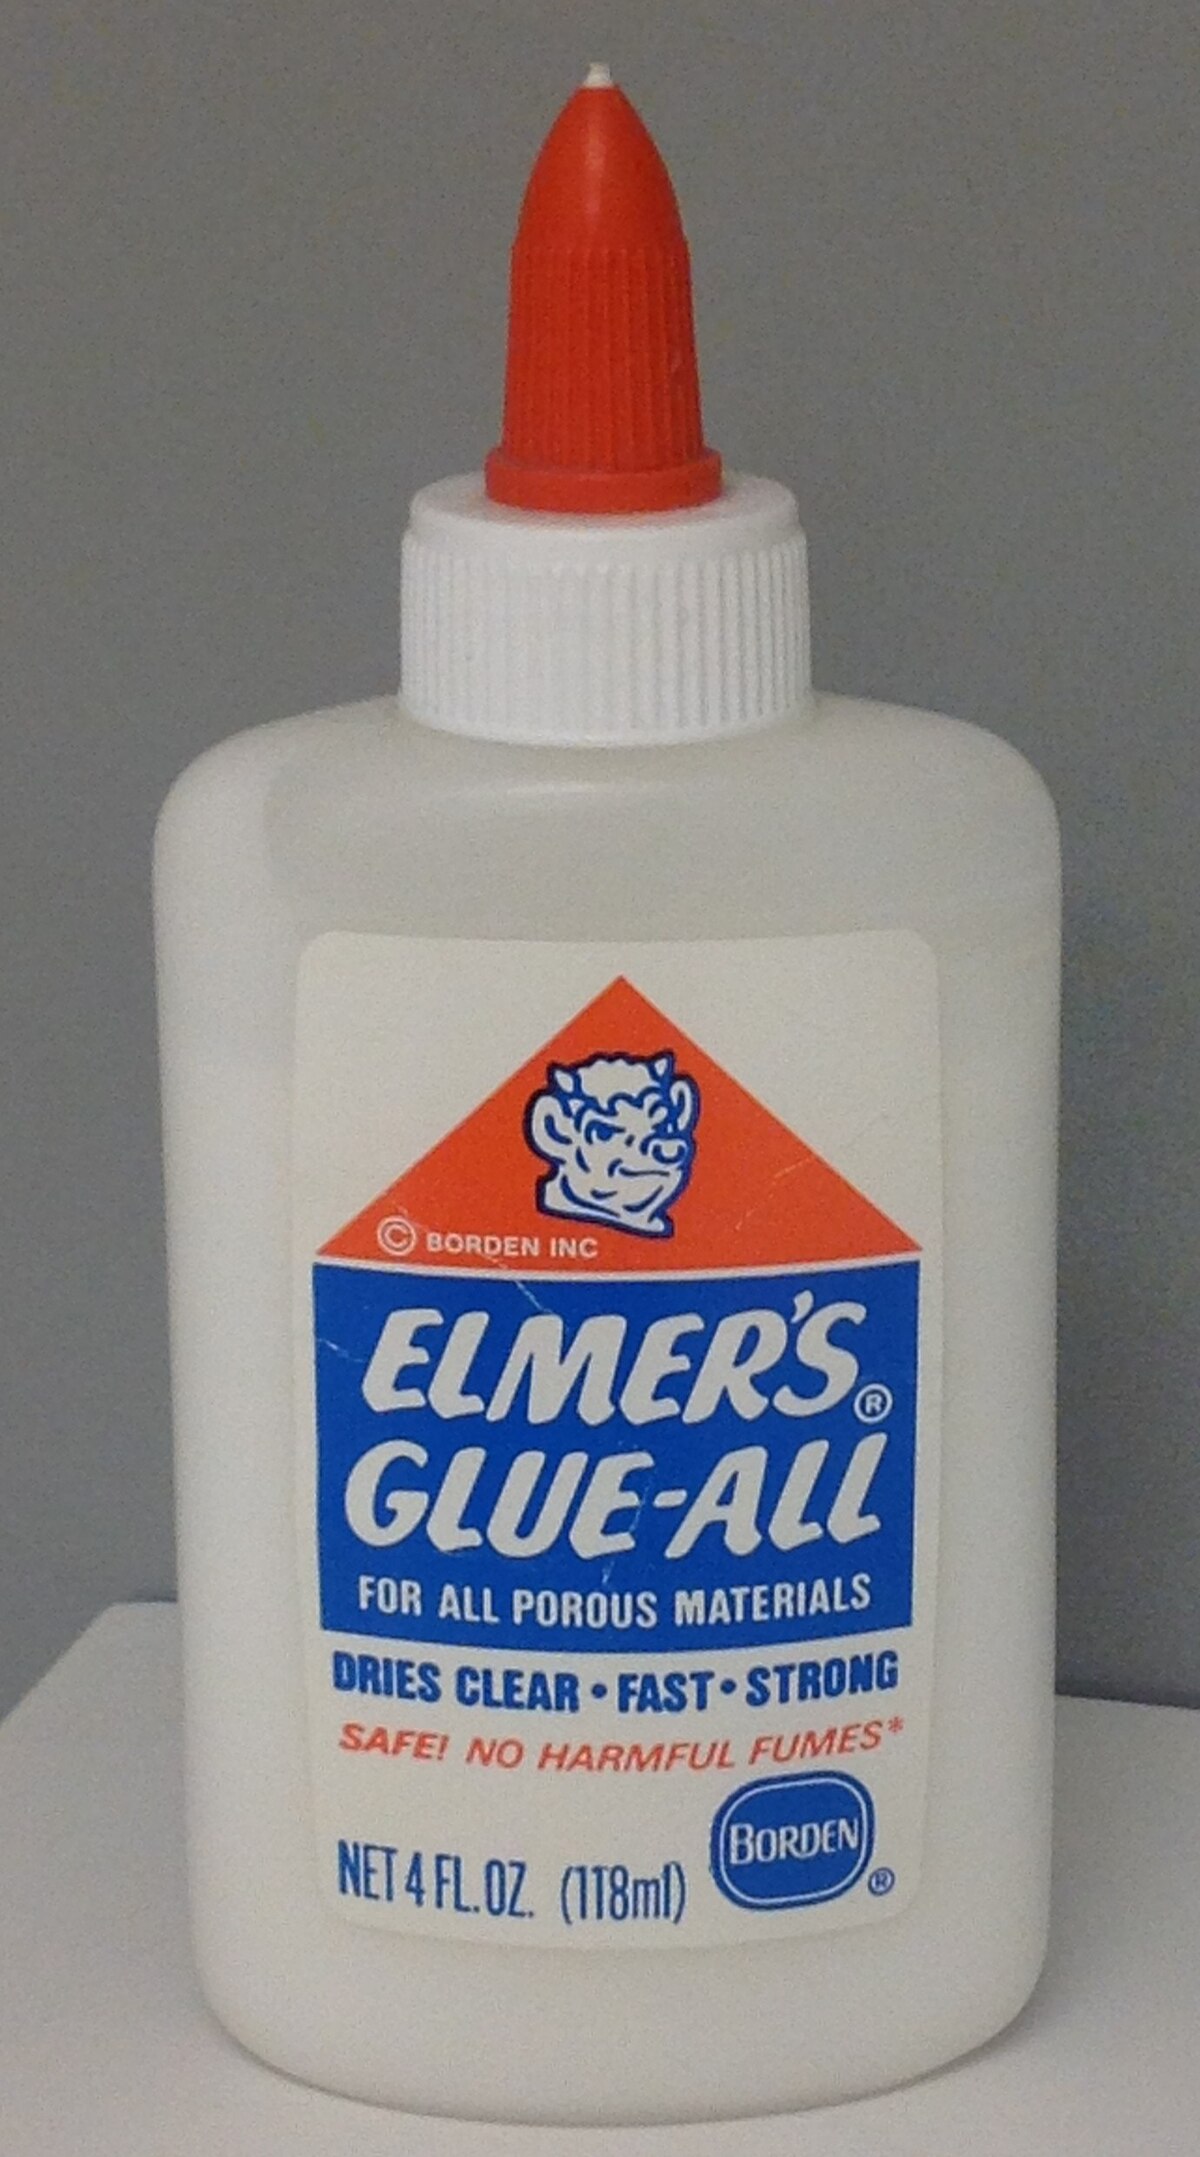 File:Elmer's Glue-All historic packaging.JPG - Wikipedia